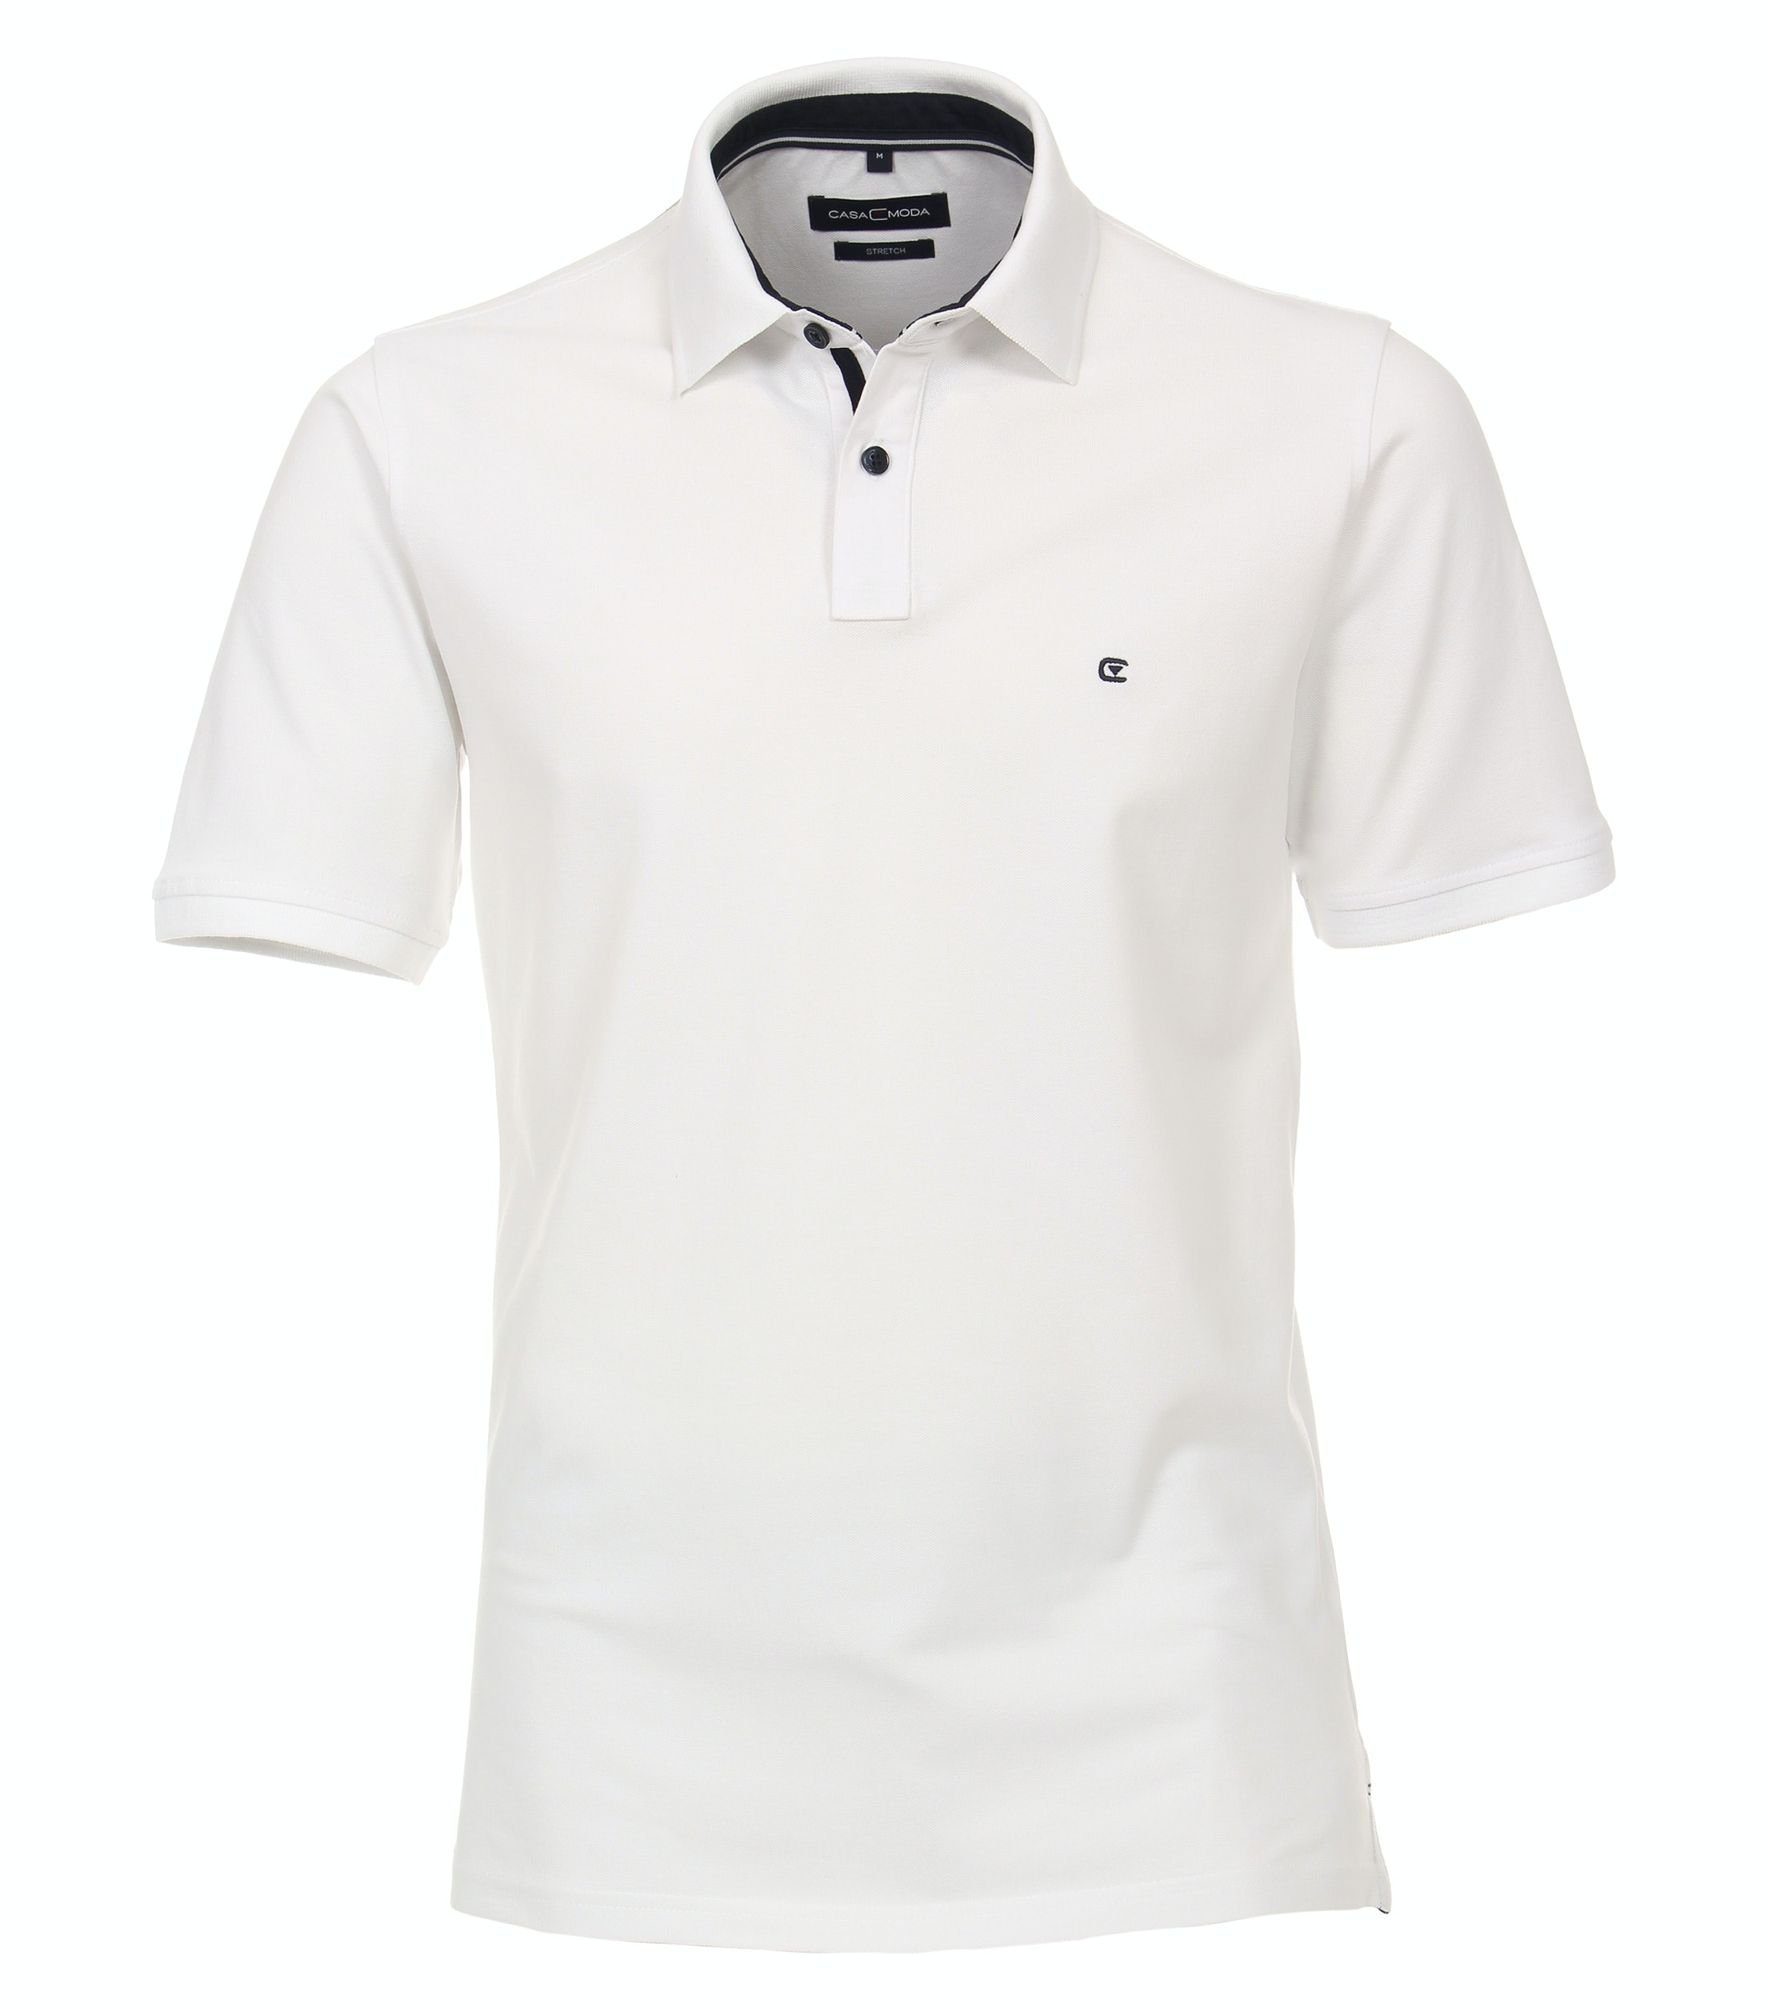 CASAMODA Poloshirt Polo-Shirt unifarben Poloshirt Weiß(000)